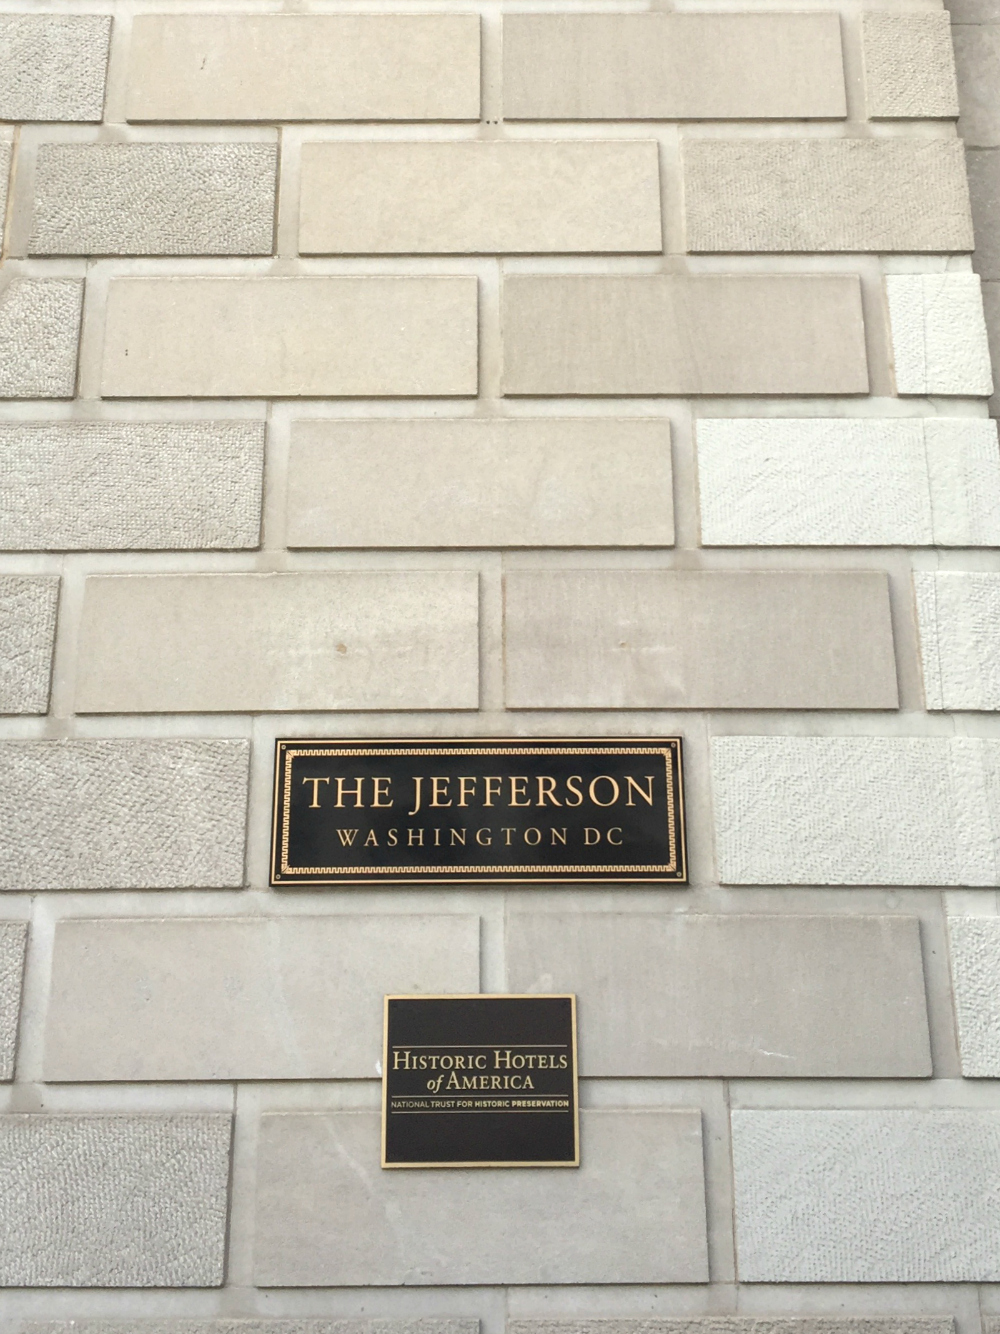 The Jefferson, The Jefferson Washington DC, The Jefferson Hotel, Washington DC Travel Guide, DC Travel Guide, Stephanie Ziajka, Diary of a Debutante